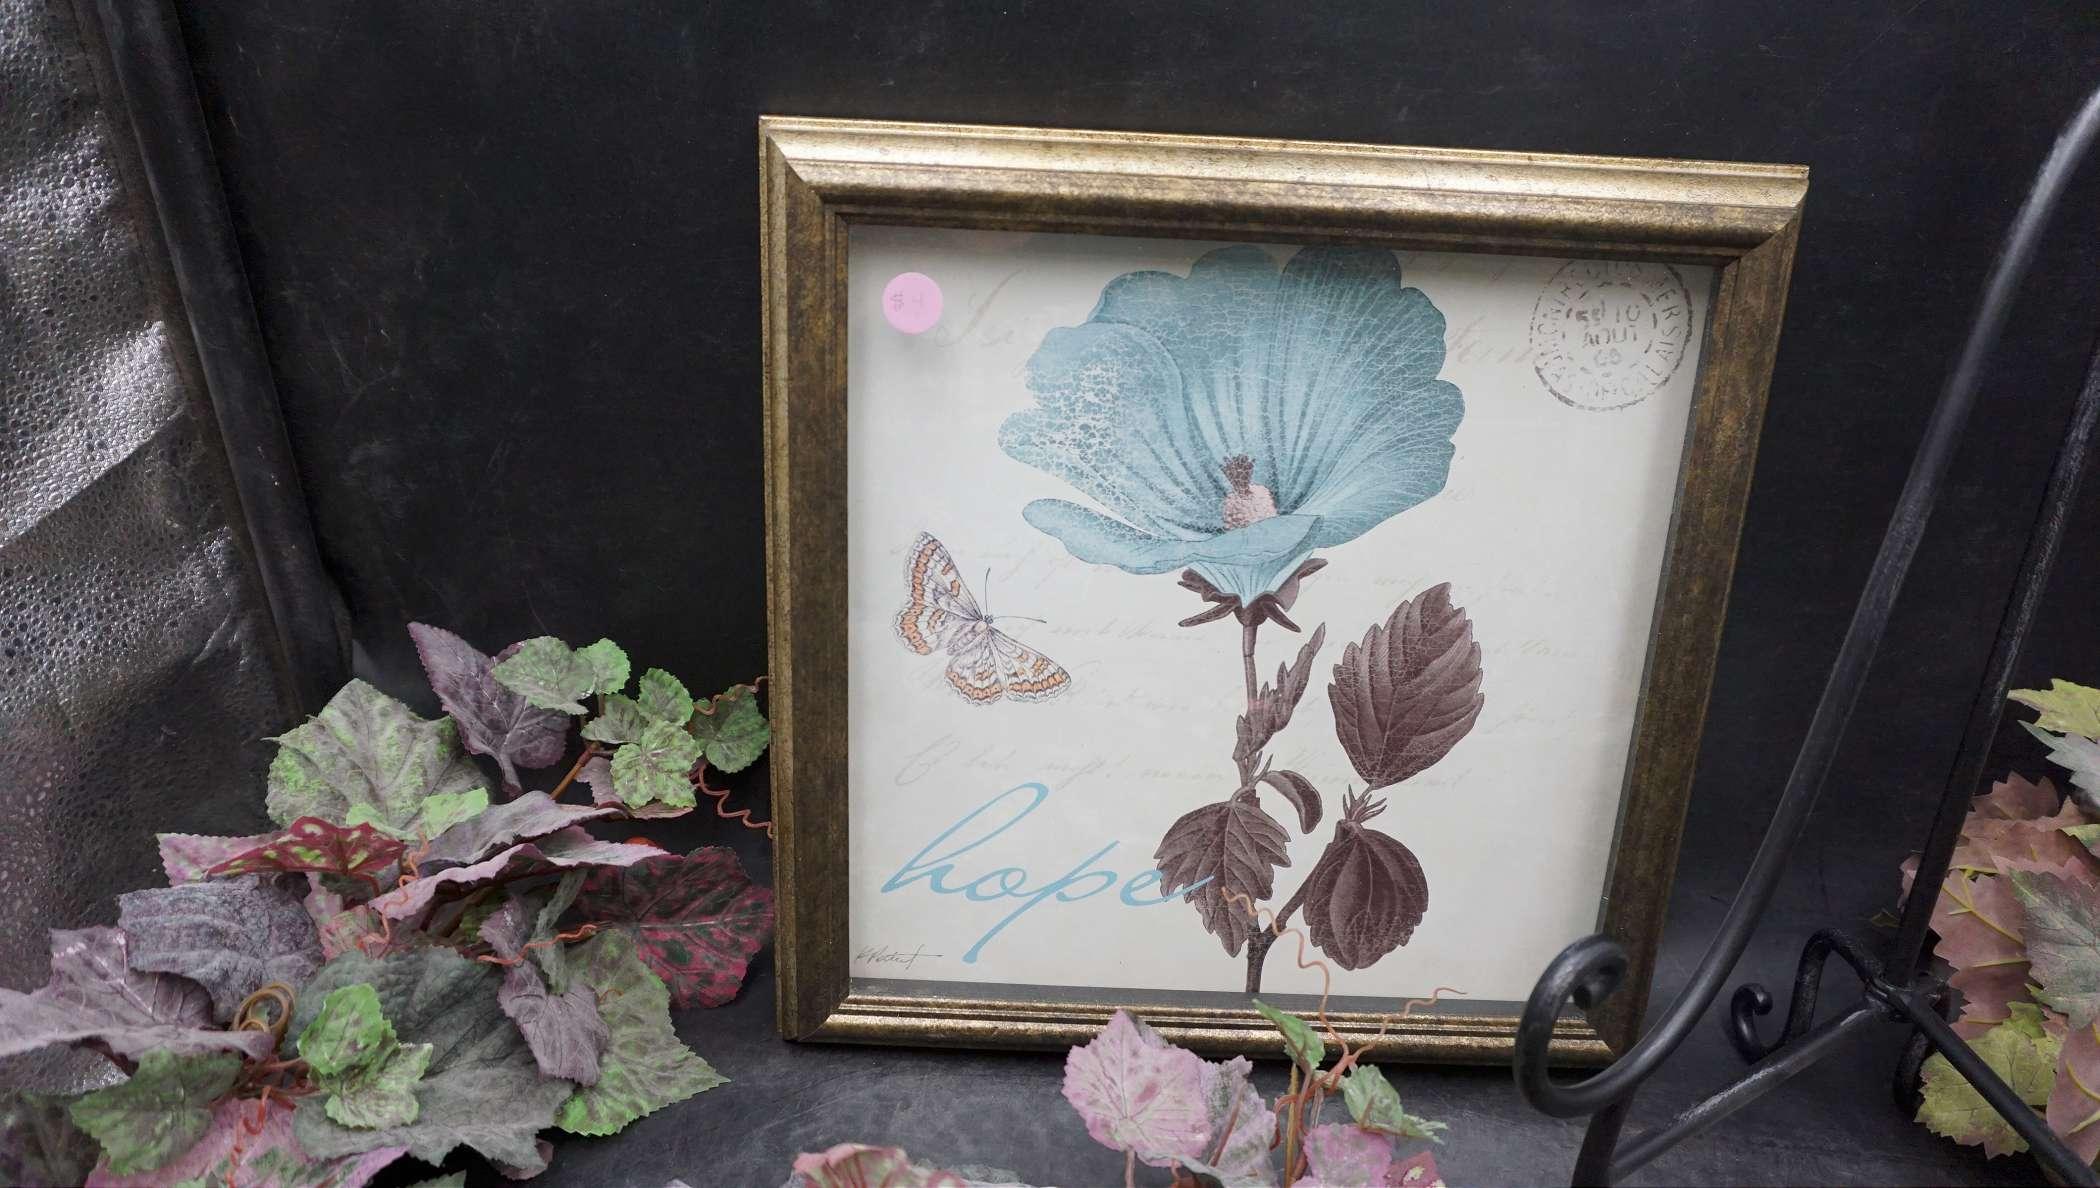 Faux Plants, Framed Flower Pictures, Metal Stand, Decorative Basket